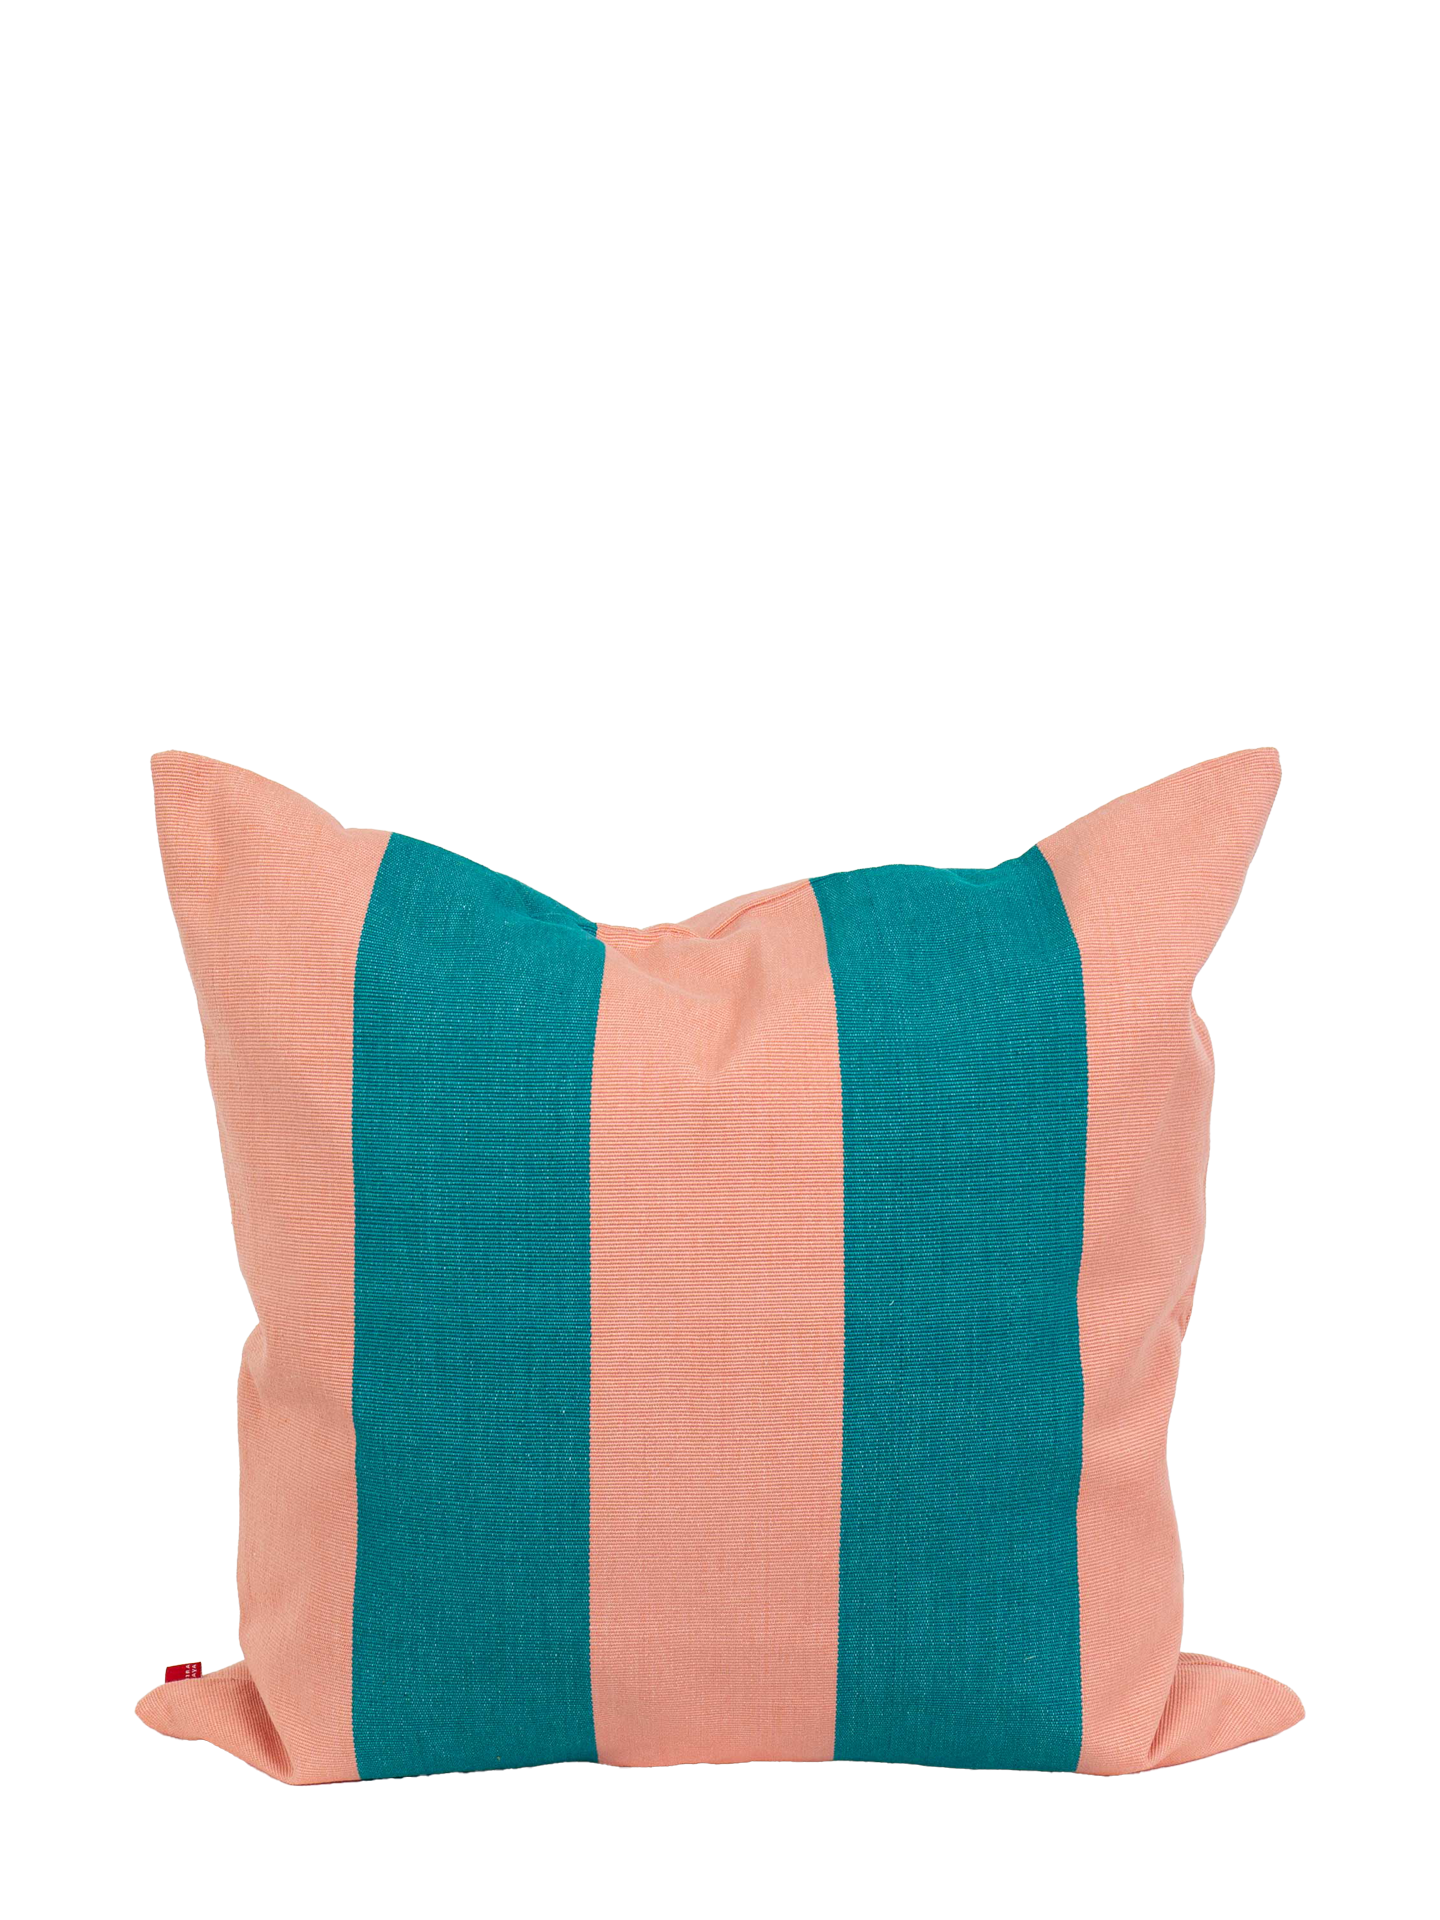 Fifi Cushion 50x50 cm, pink/turquoise